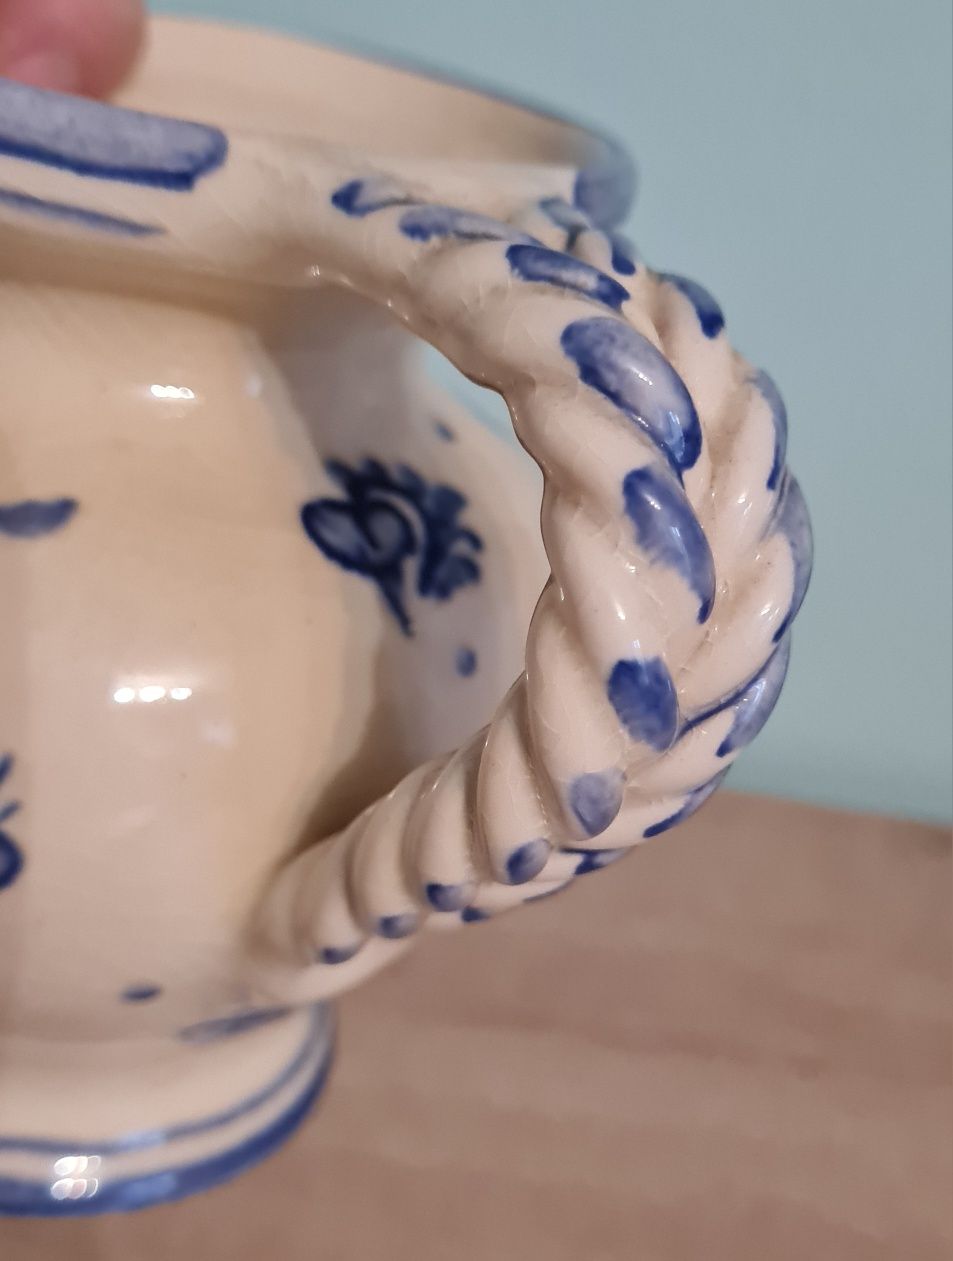 Dzbanek ceramiczny Vintage